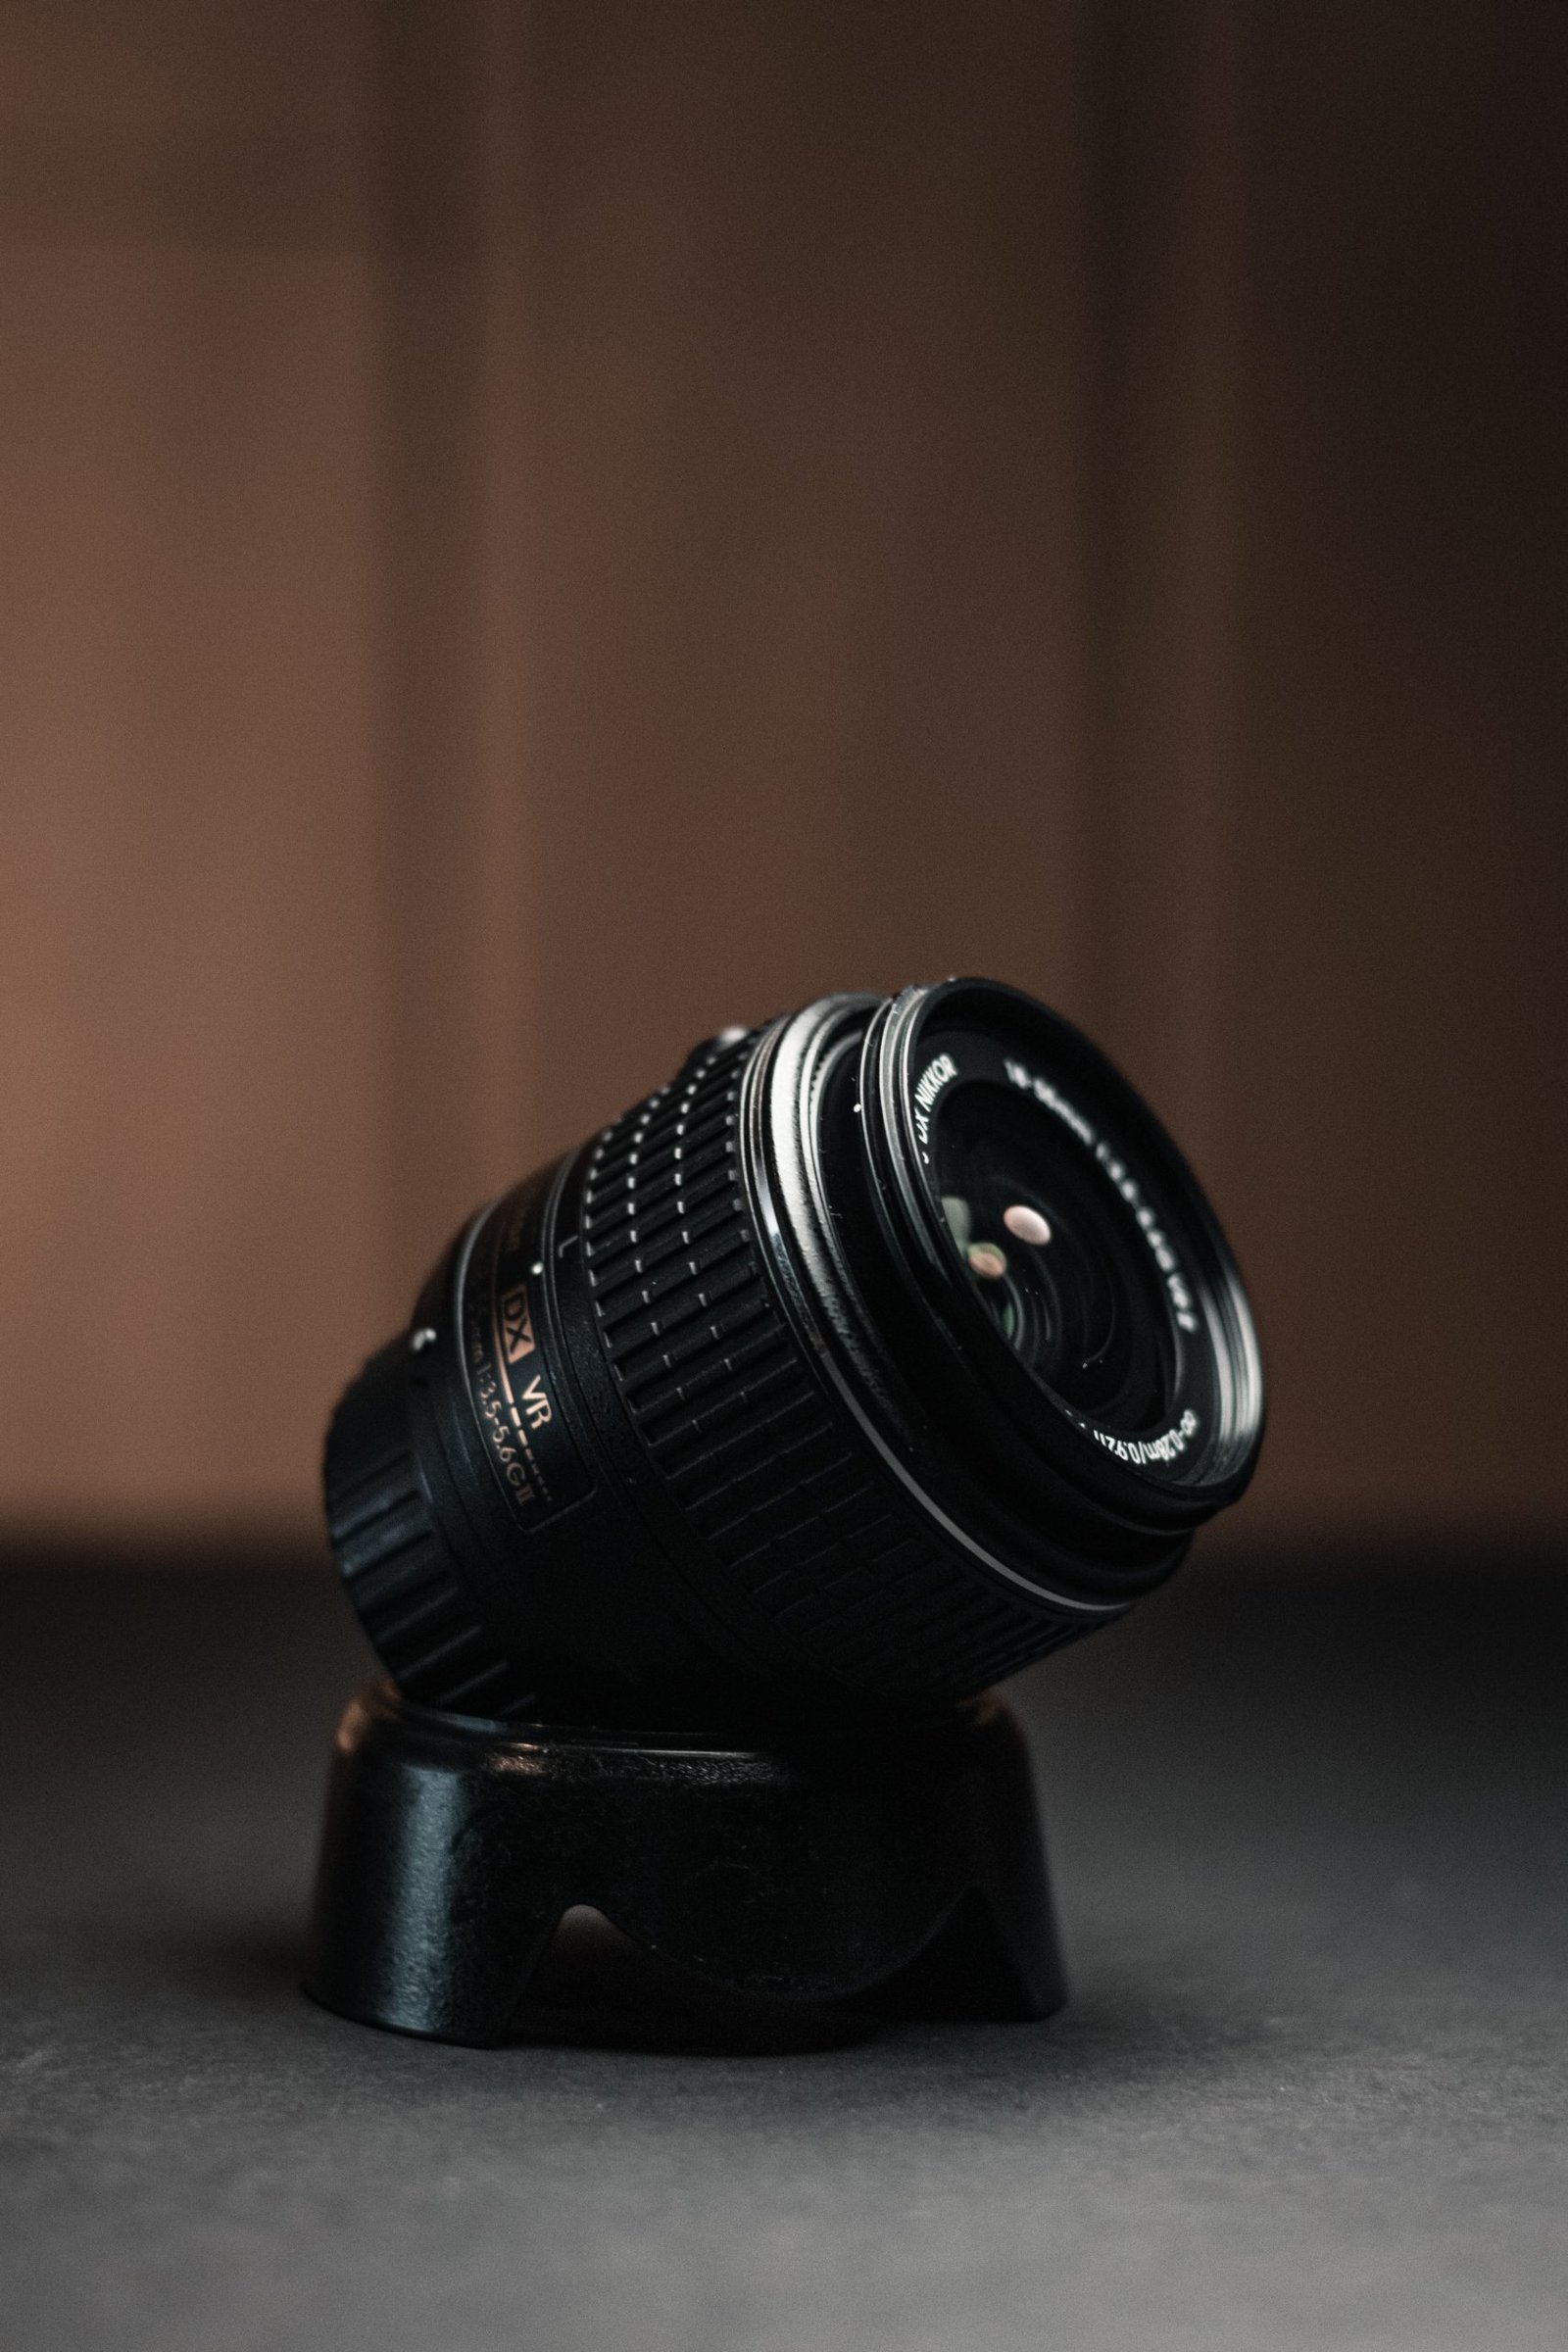 The Canon Fisheye Lens